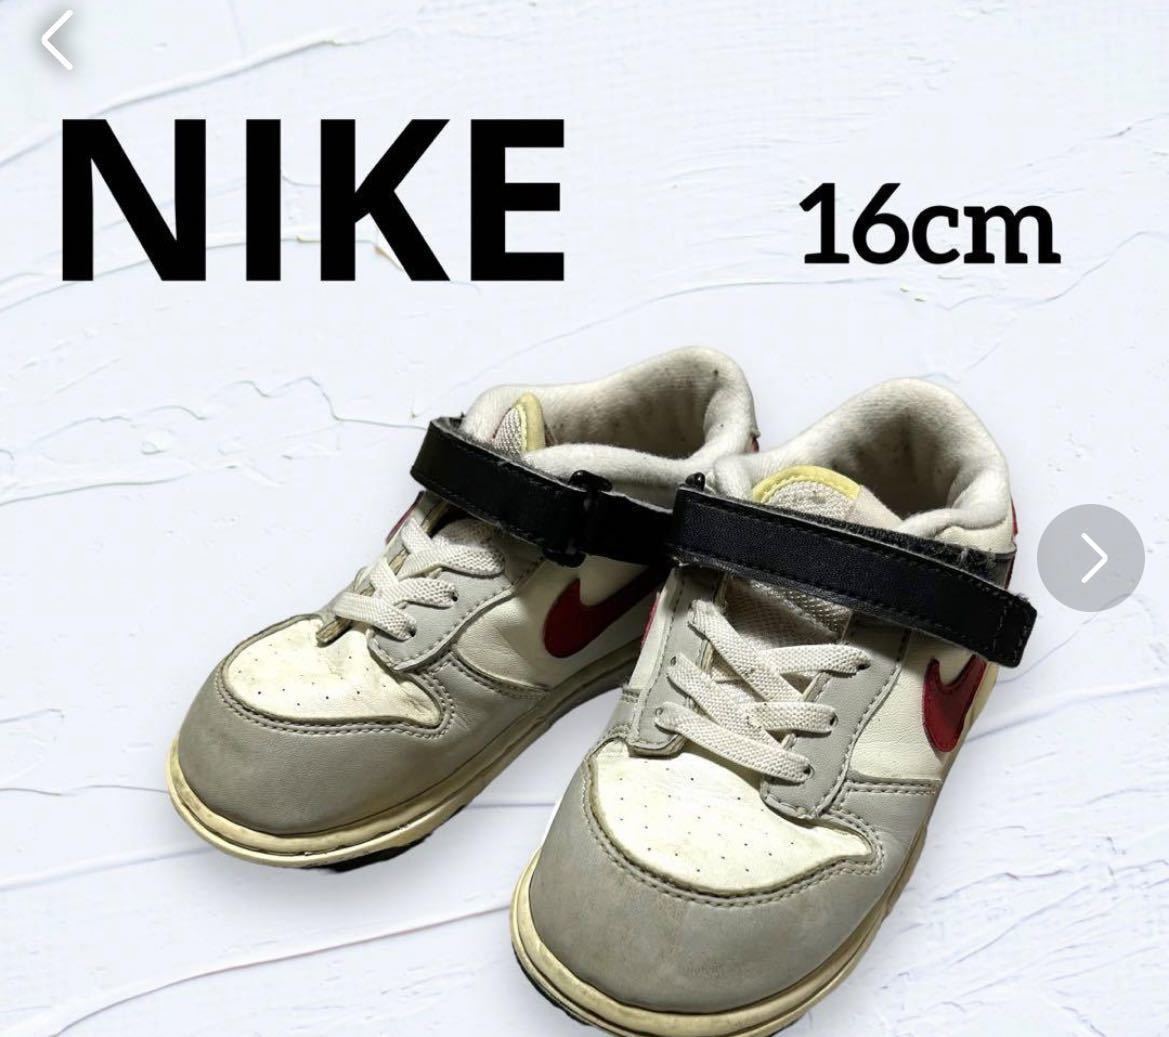 NIKE スニーカー シューズ ナイキ キッズ KIDS 16cmマジックテープ 靴_画像1